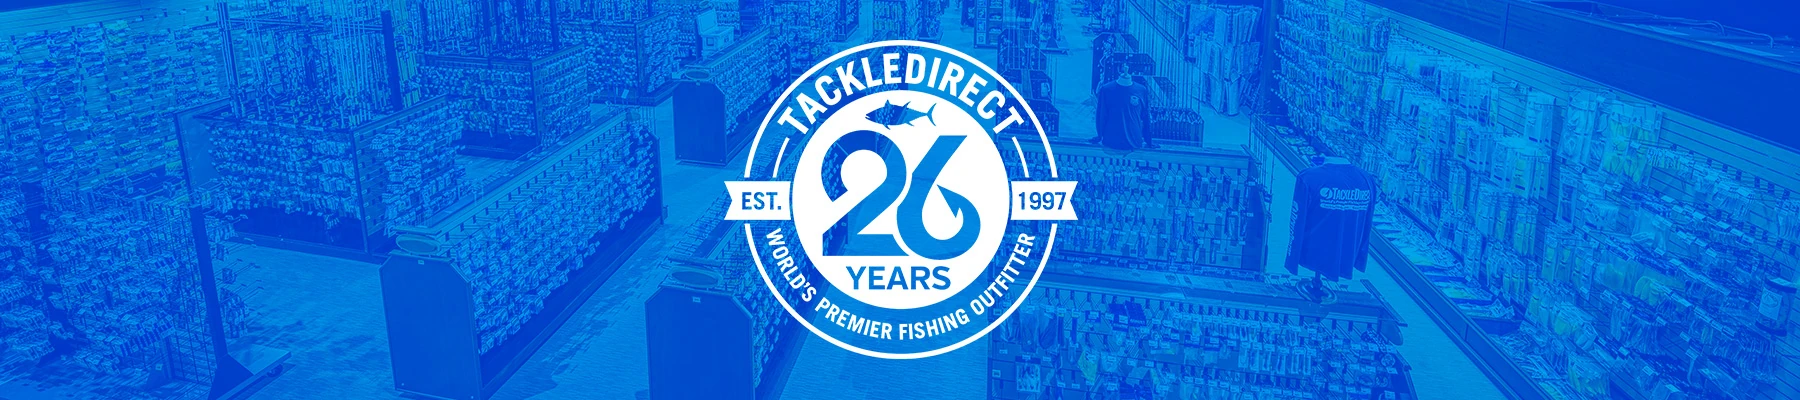 TackleDirect 26th Anniversary